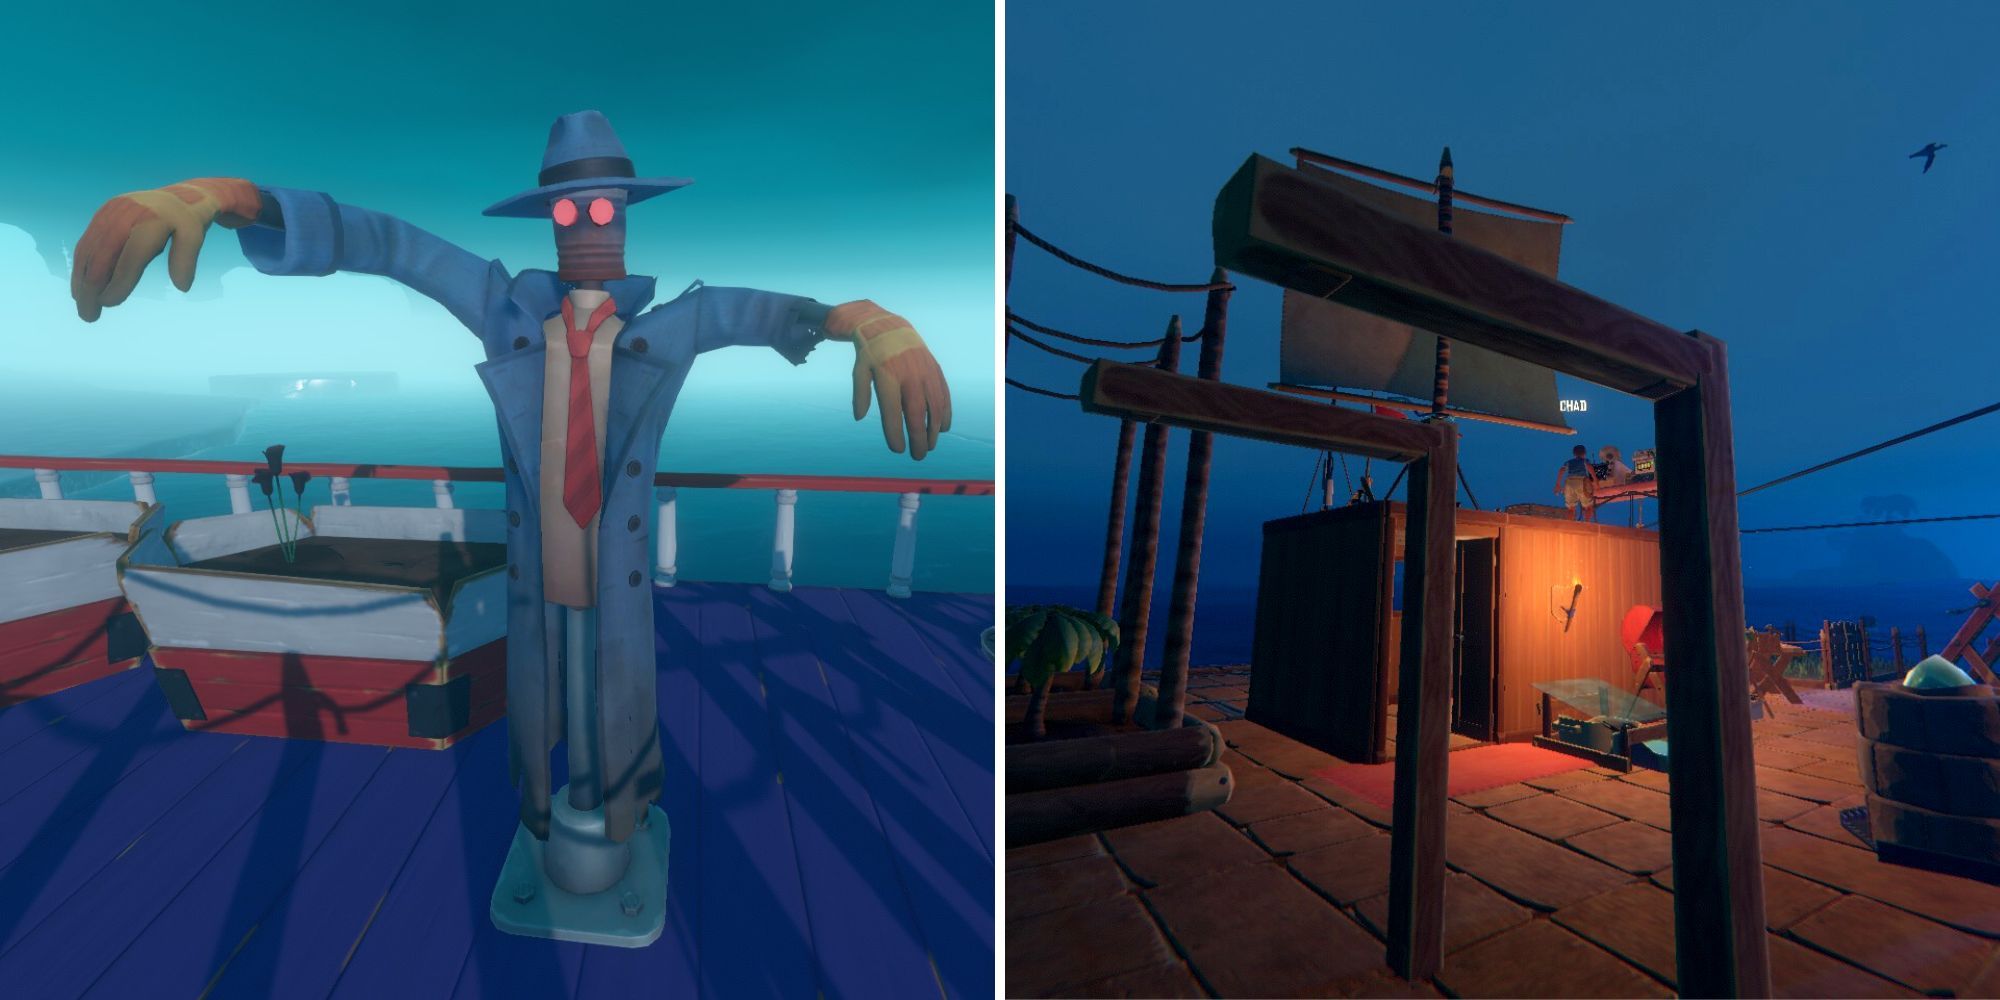 advanced scarecrow and horizontal pillar being built